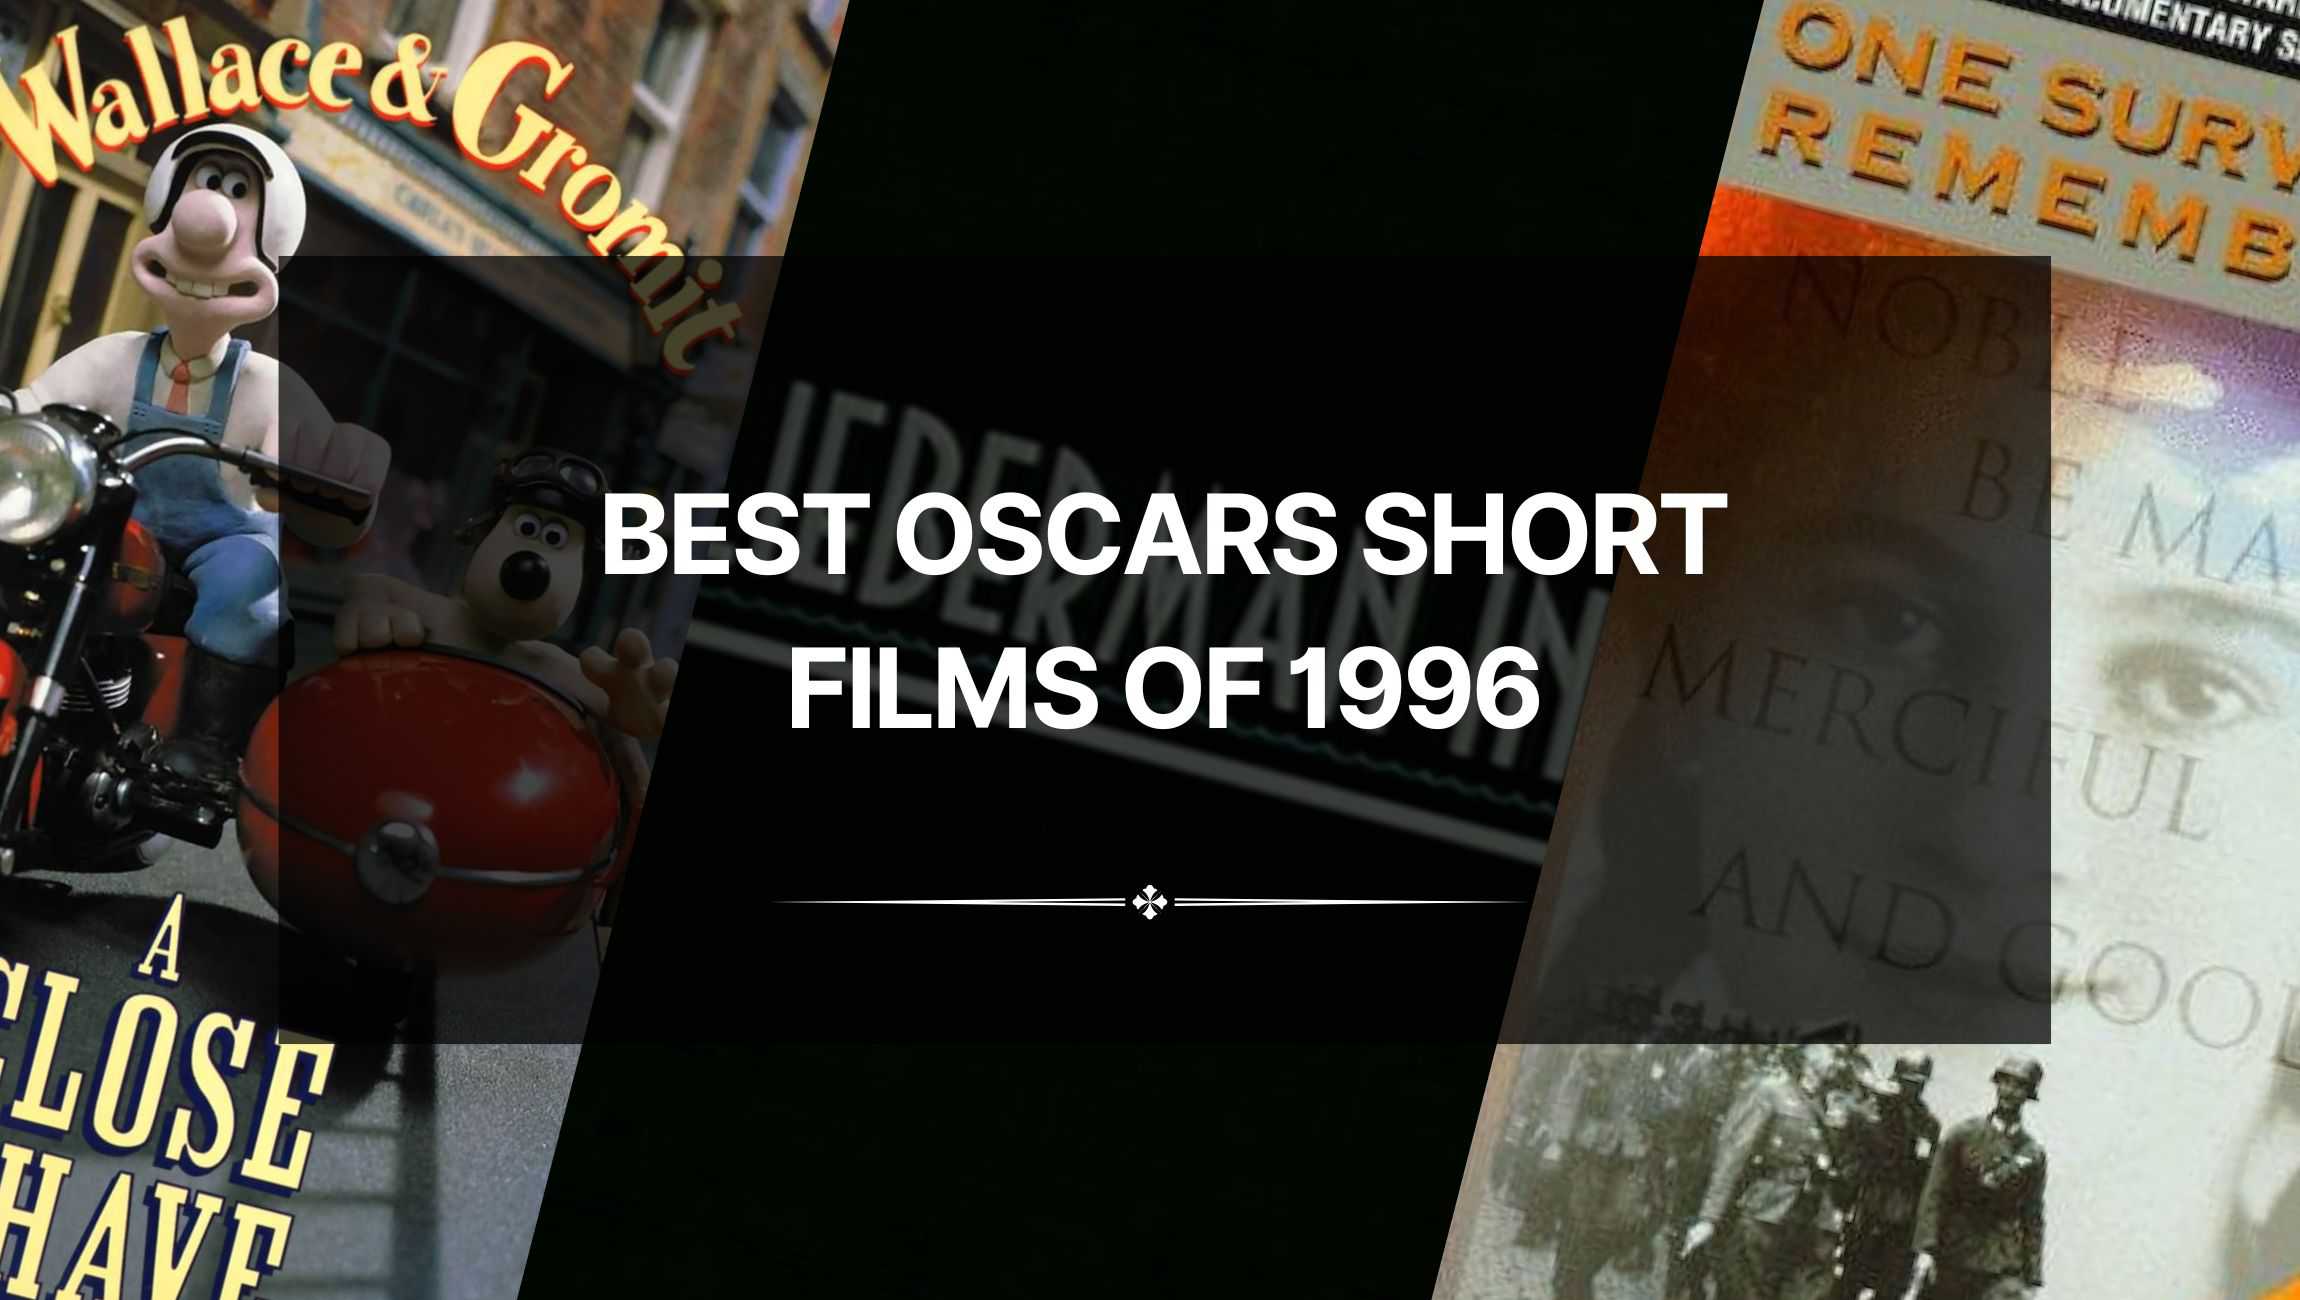 Best Oscars Short Films of 1996